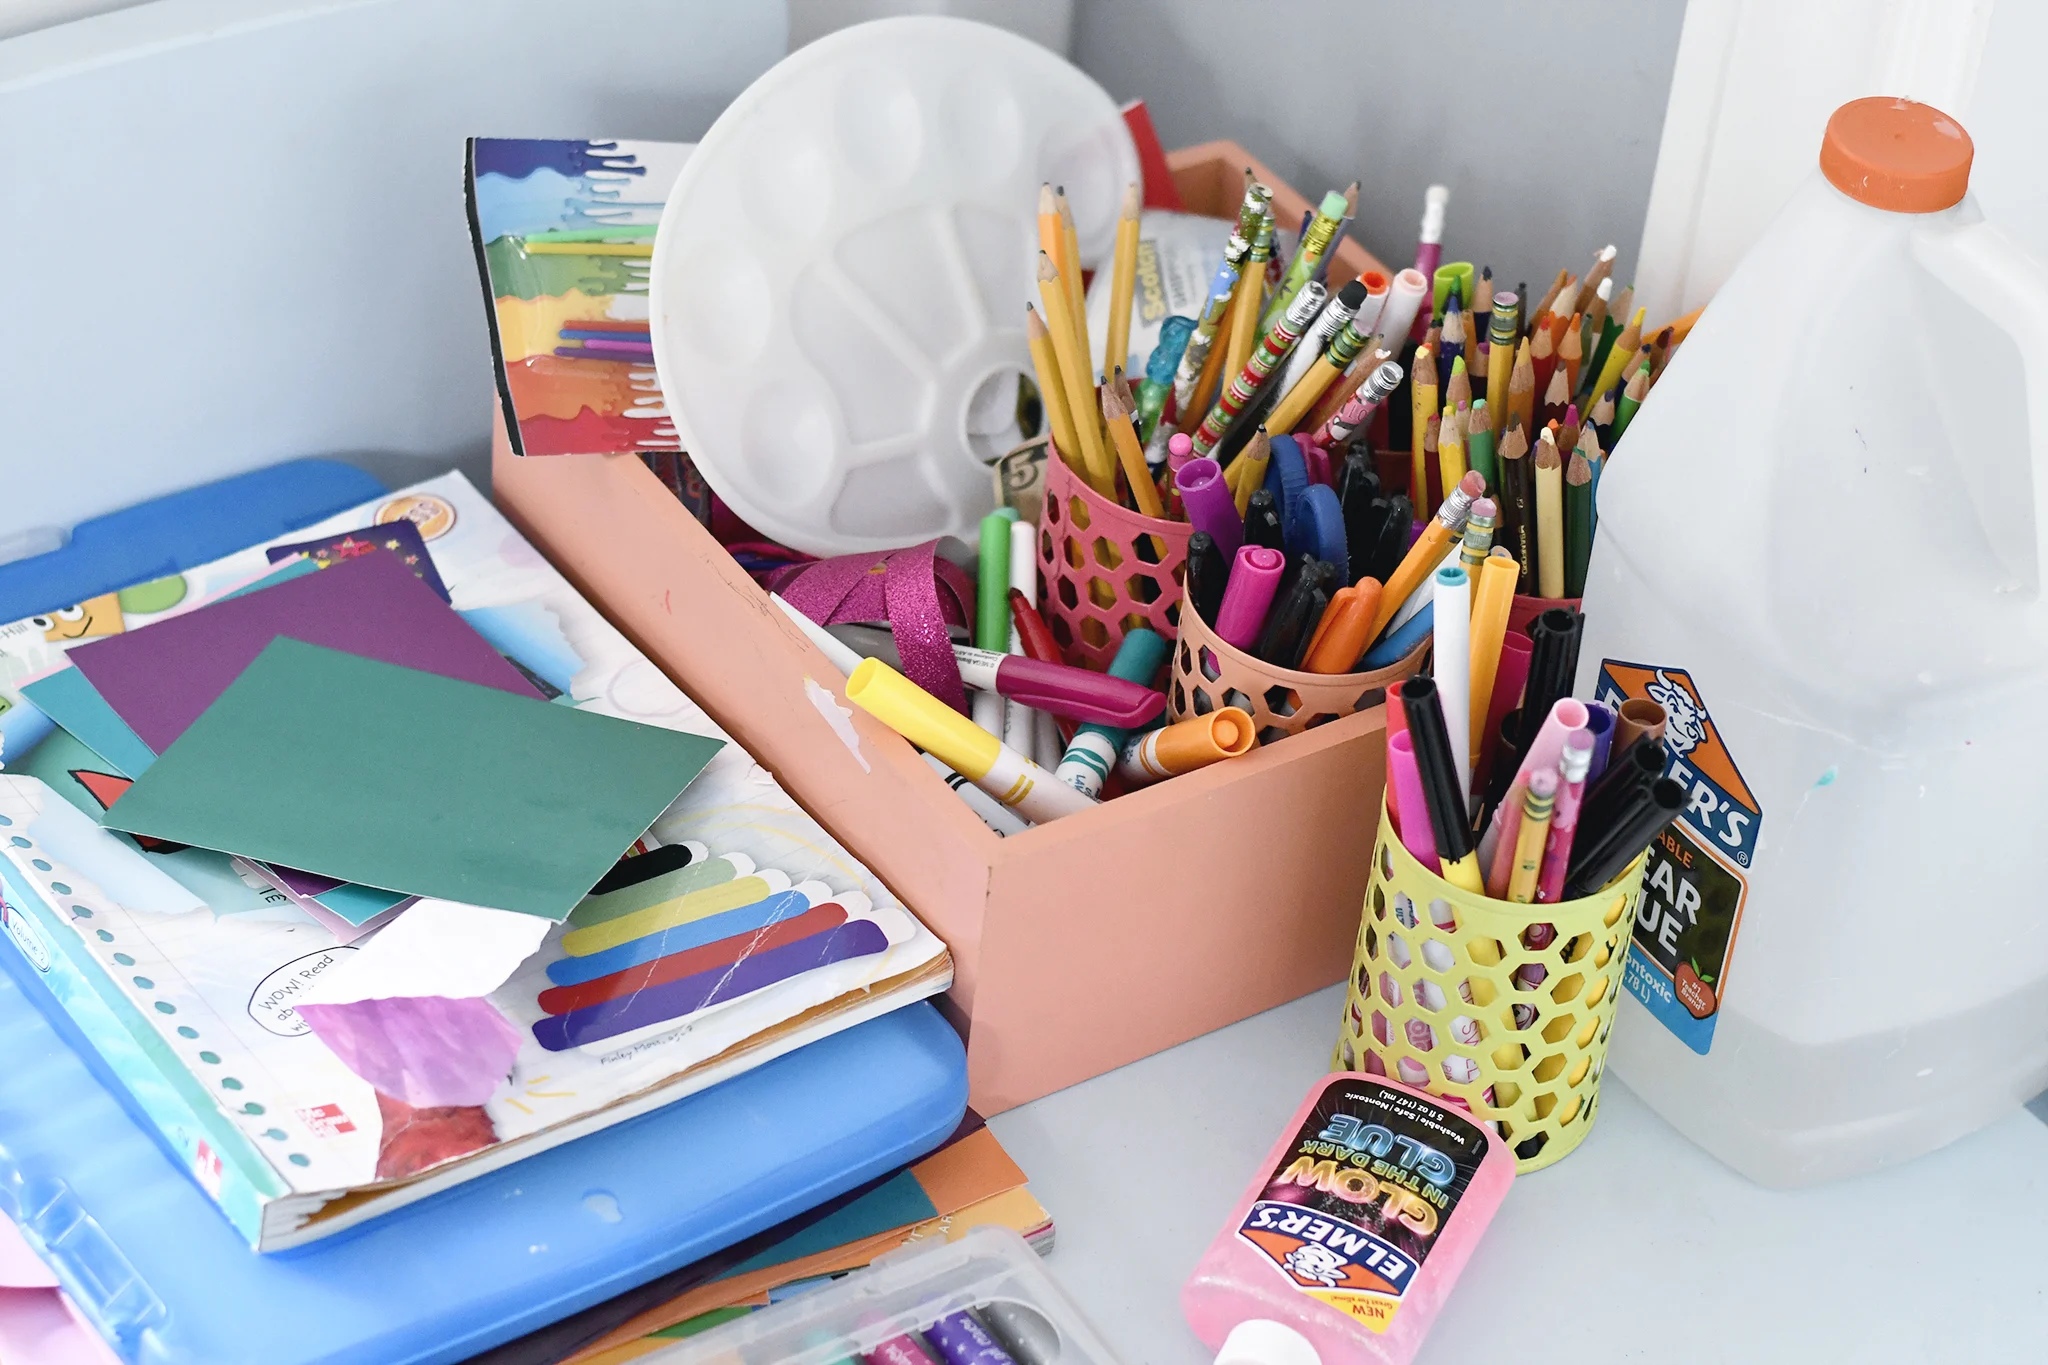 Kids' Art Supply Storage & Organization Story - Life with Less Mess